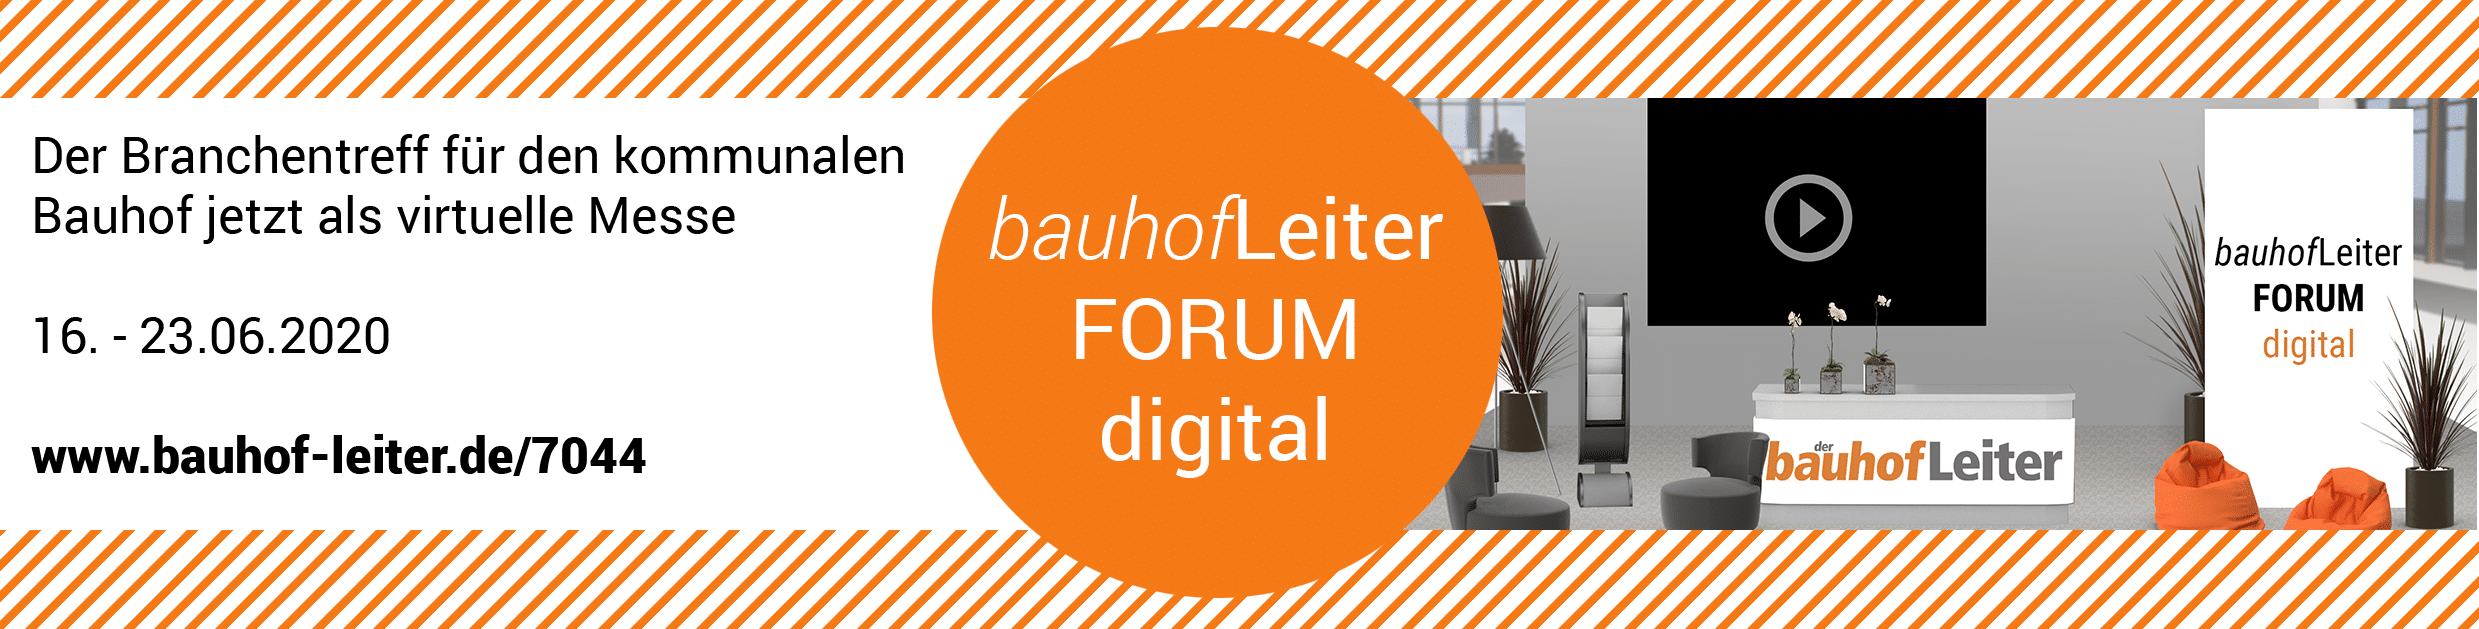 bauhofLeiter Forum digital